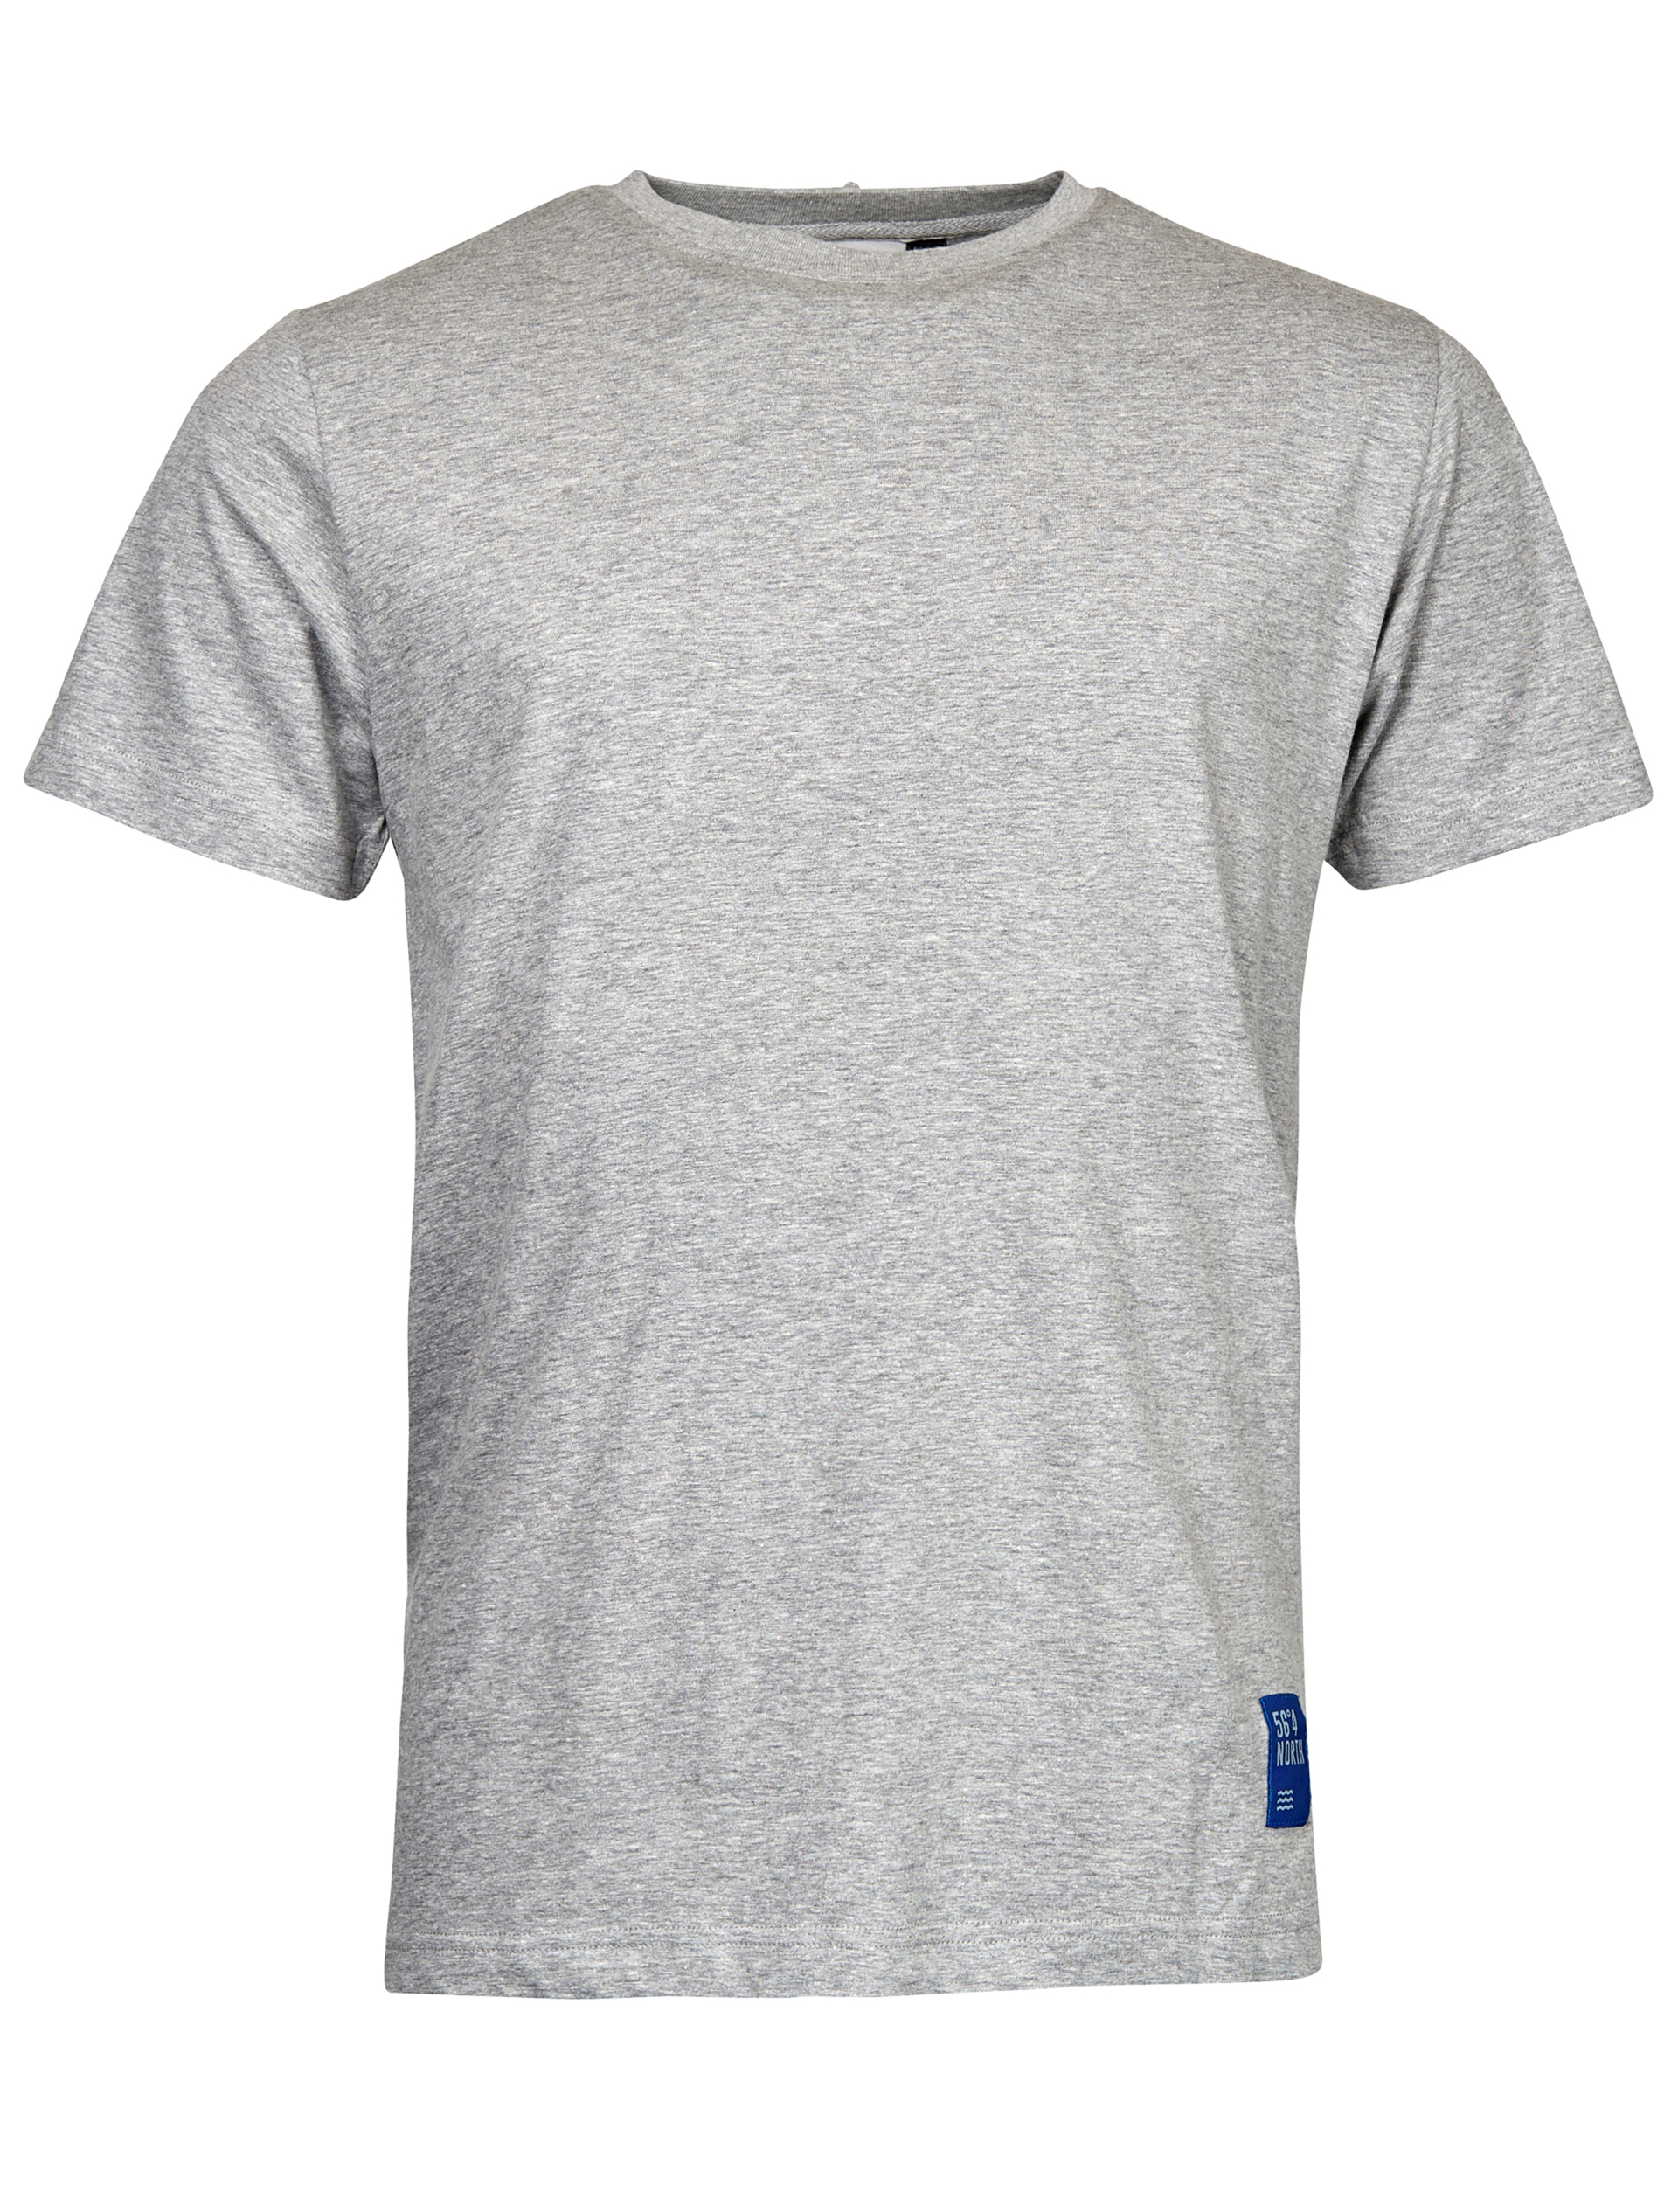 North T-shirt grå / grey